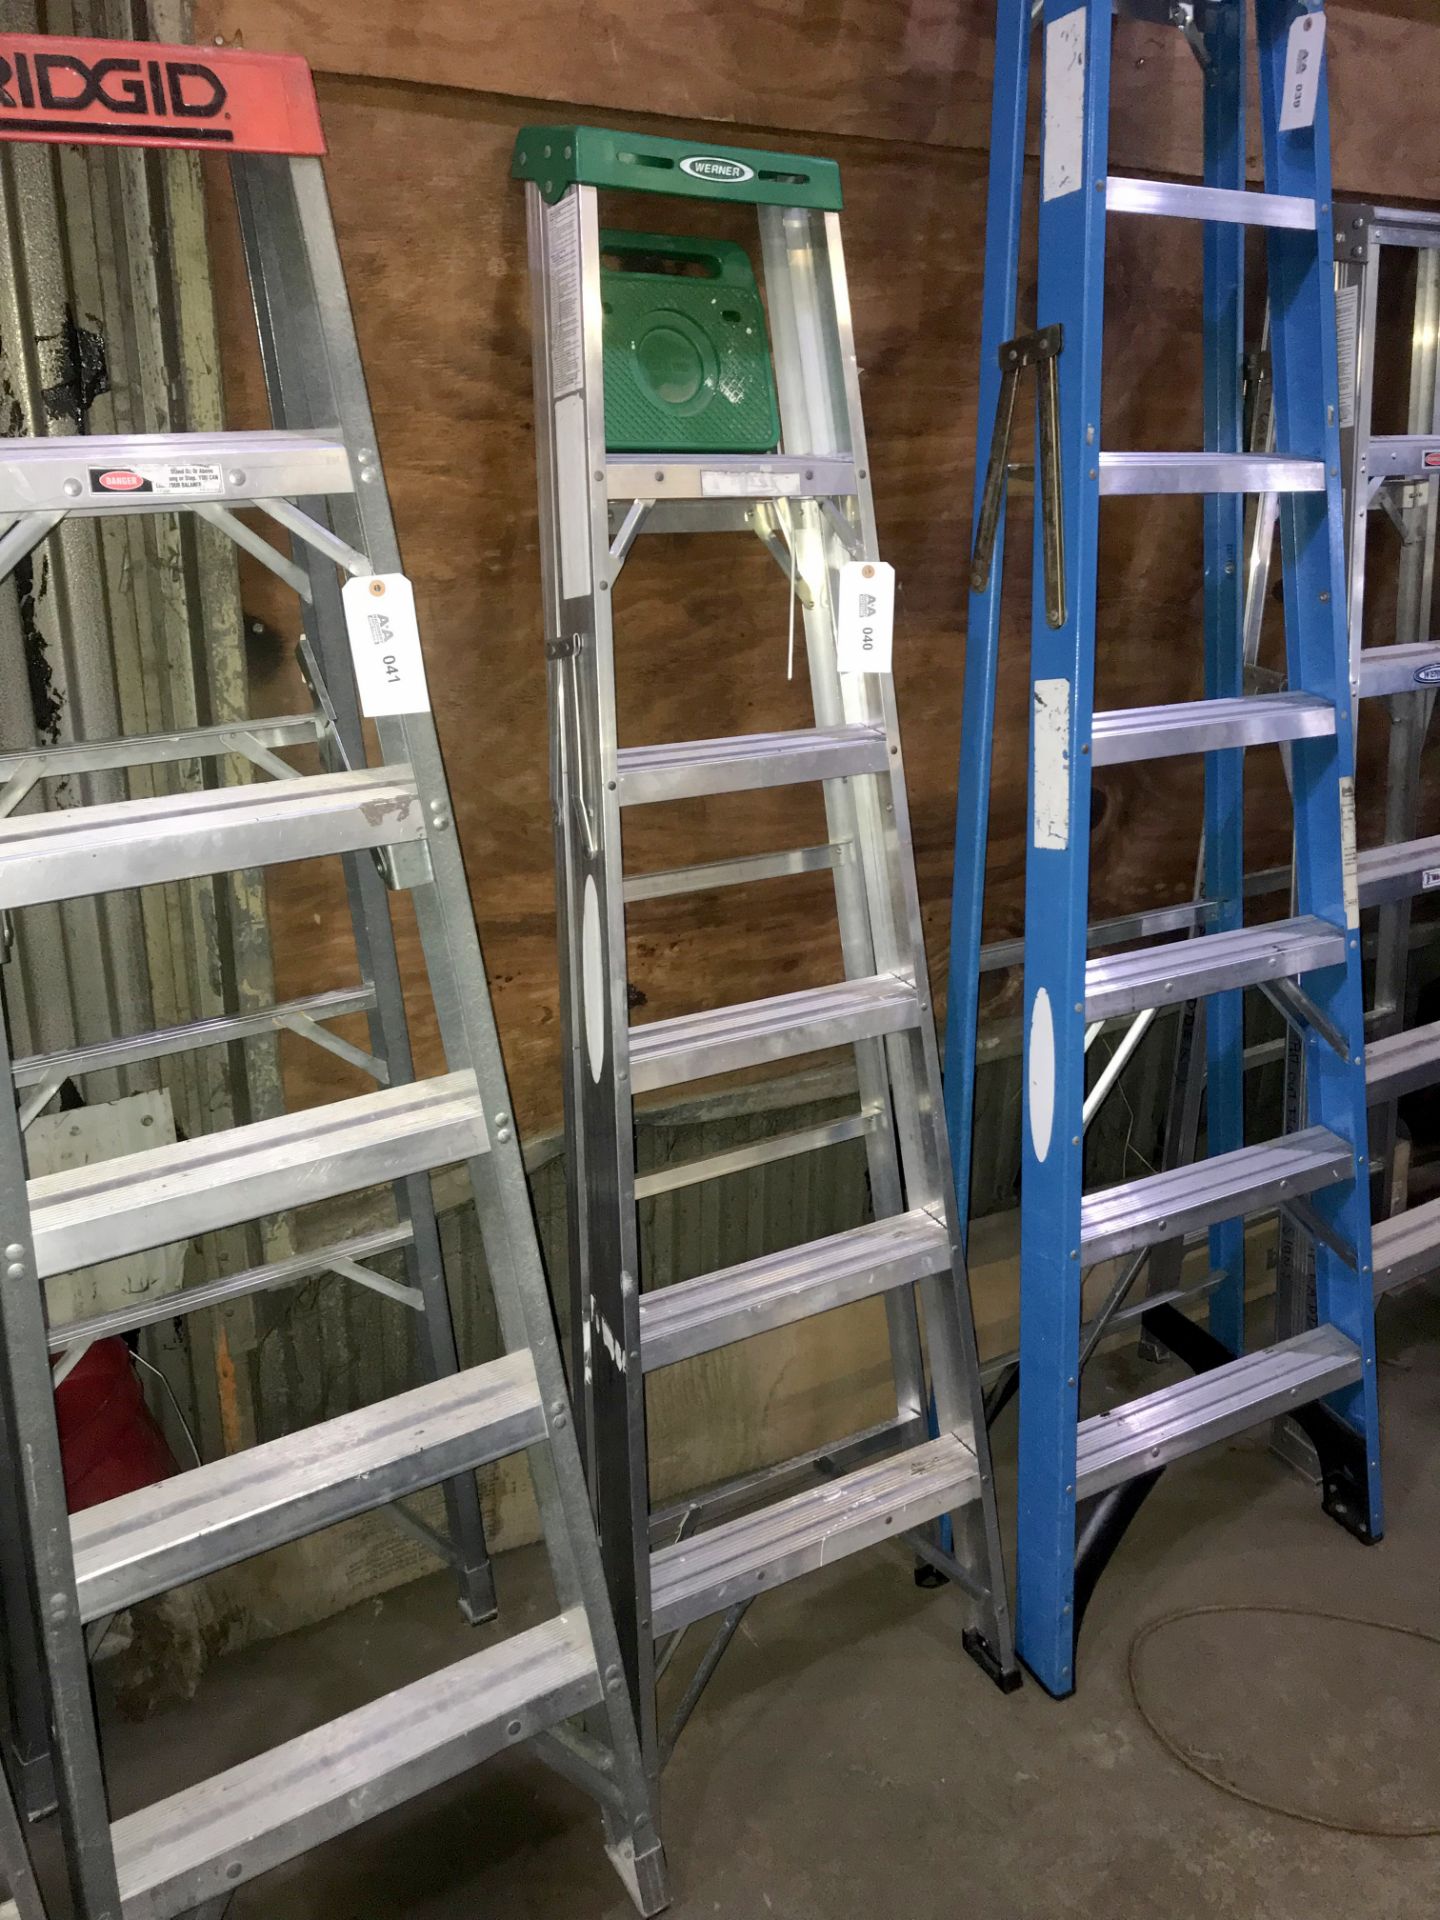 Werner 6' Aluminum Step Ladder (Located at 8300 National Highway, Pennsauken, NJ) - Image 2 of 2